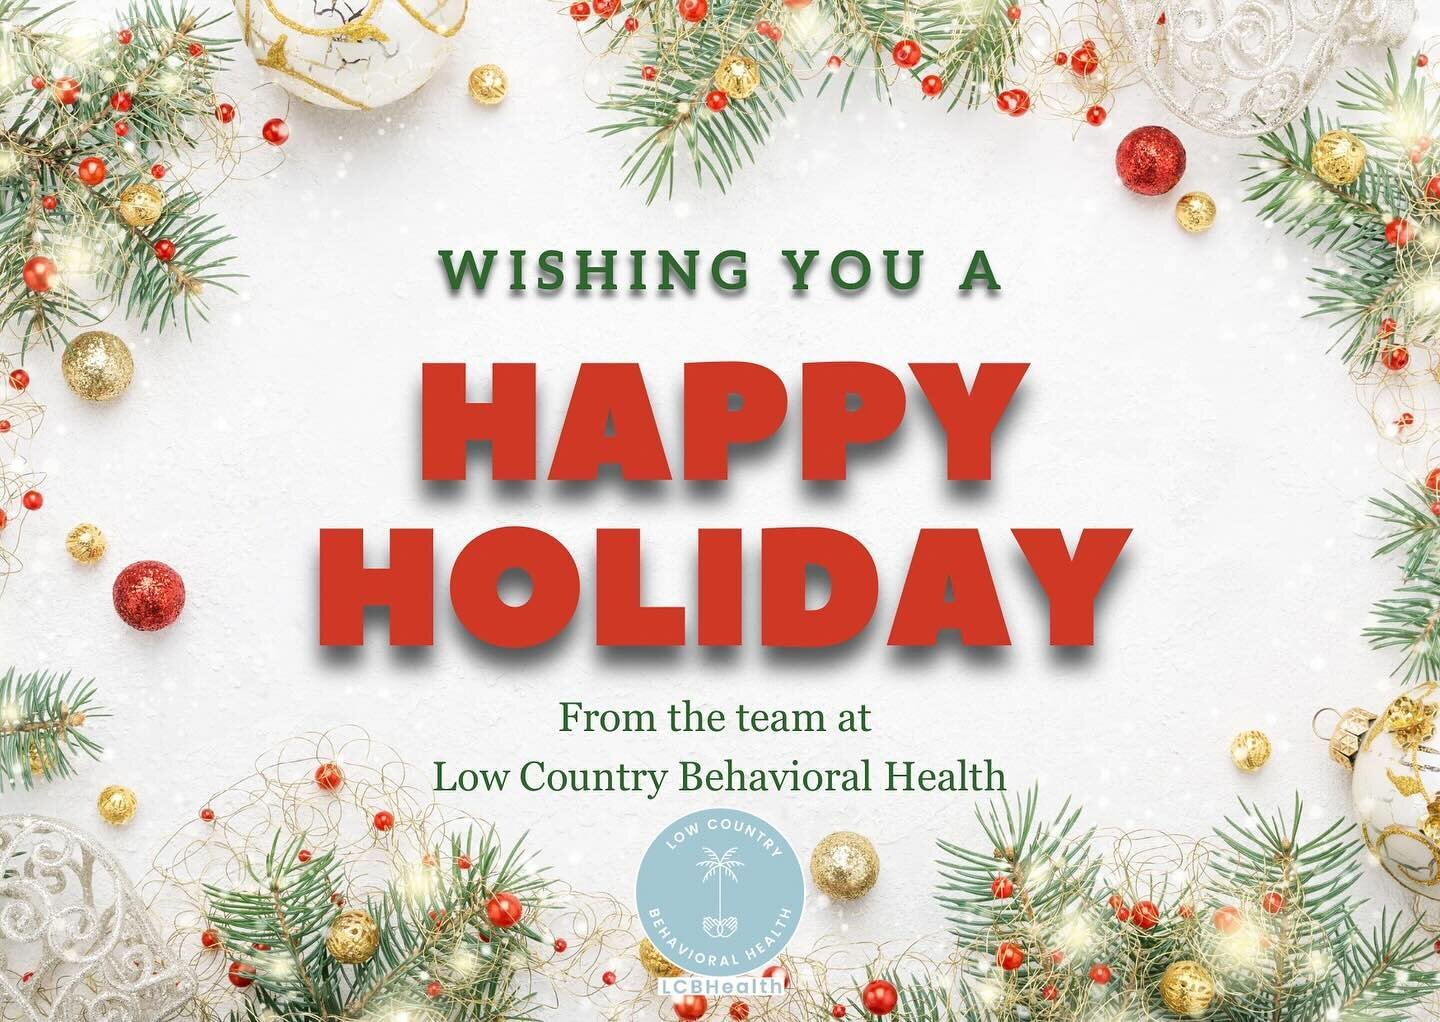 Wishing you peace, joy, and hope this holiday season.